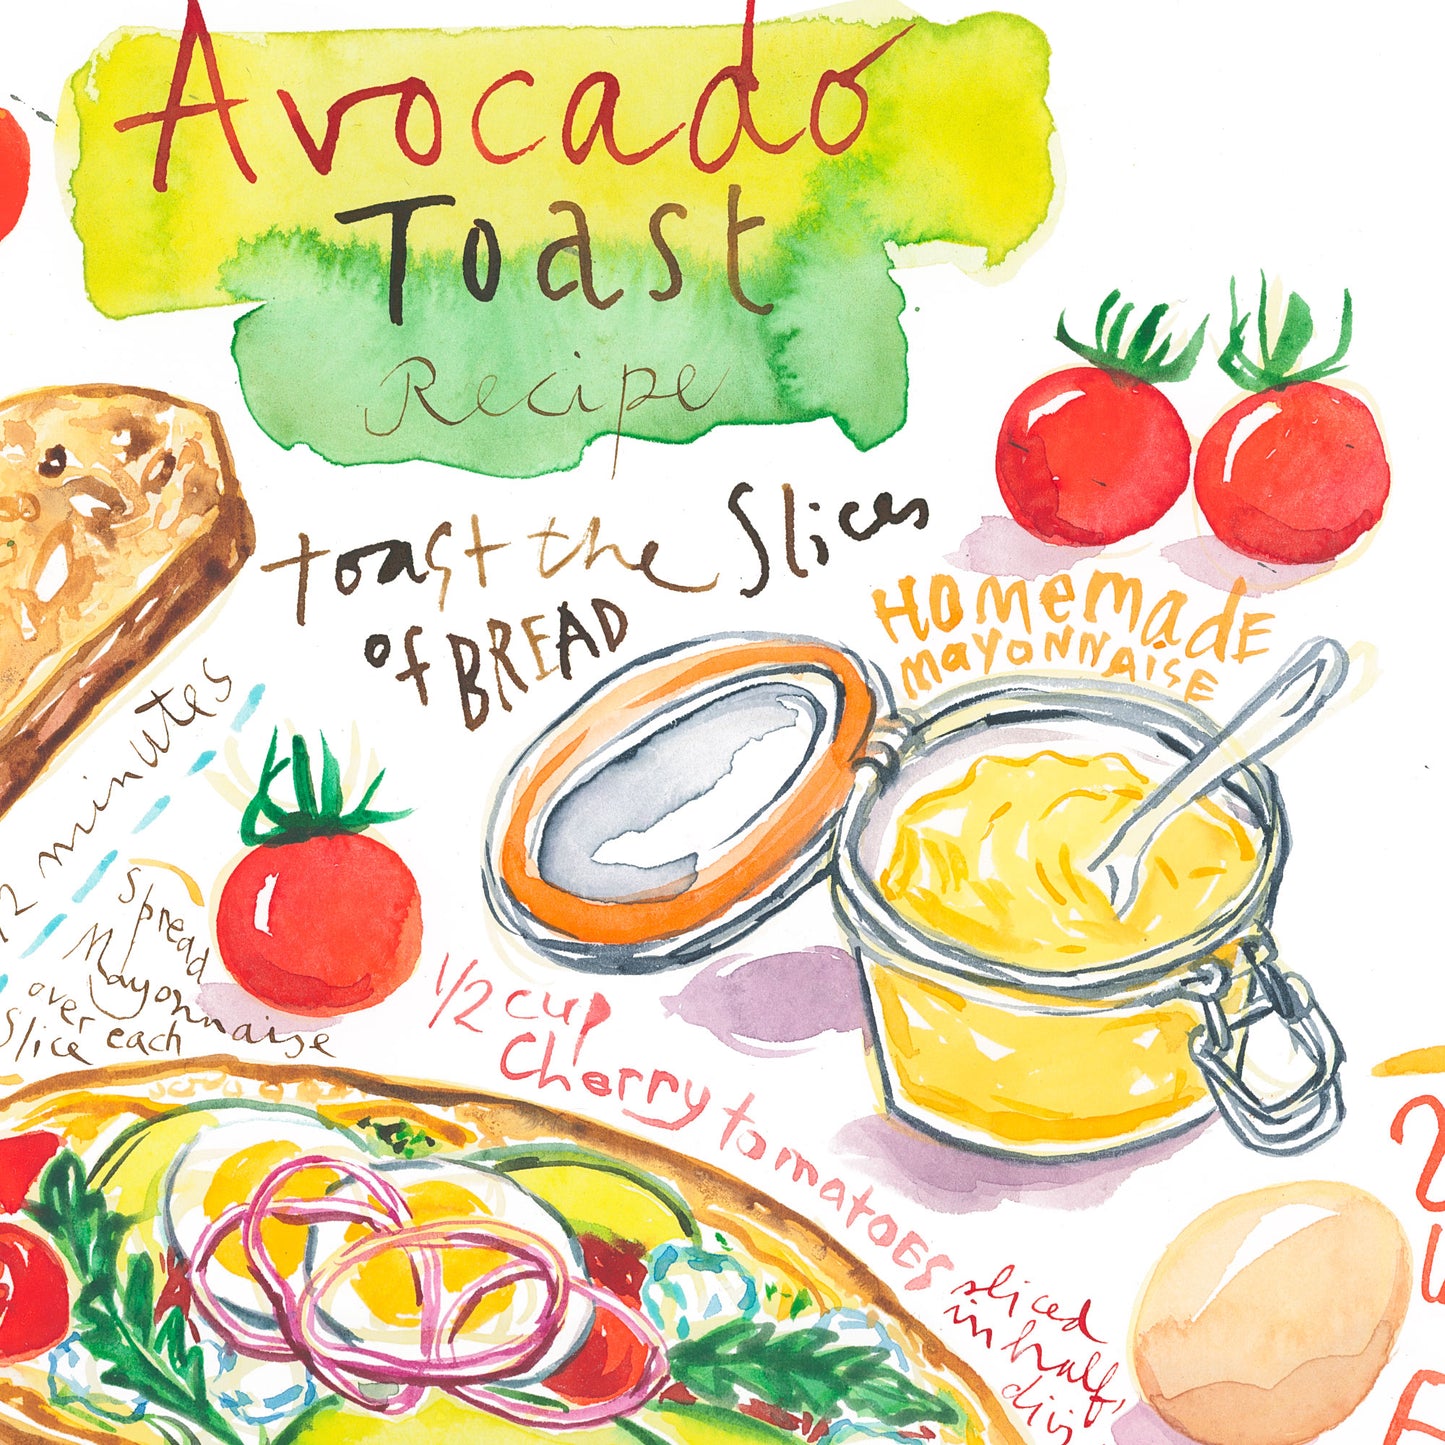 Avocado Toast recipe. Original watercolor painting